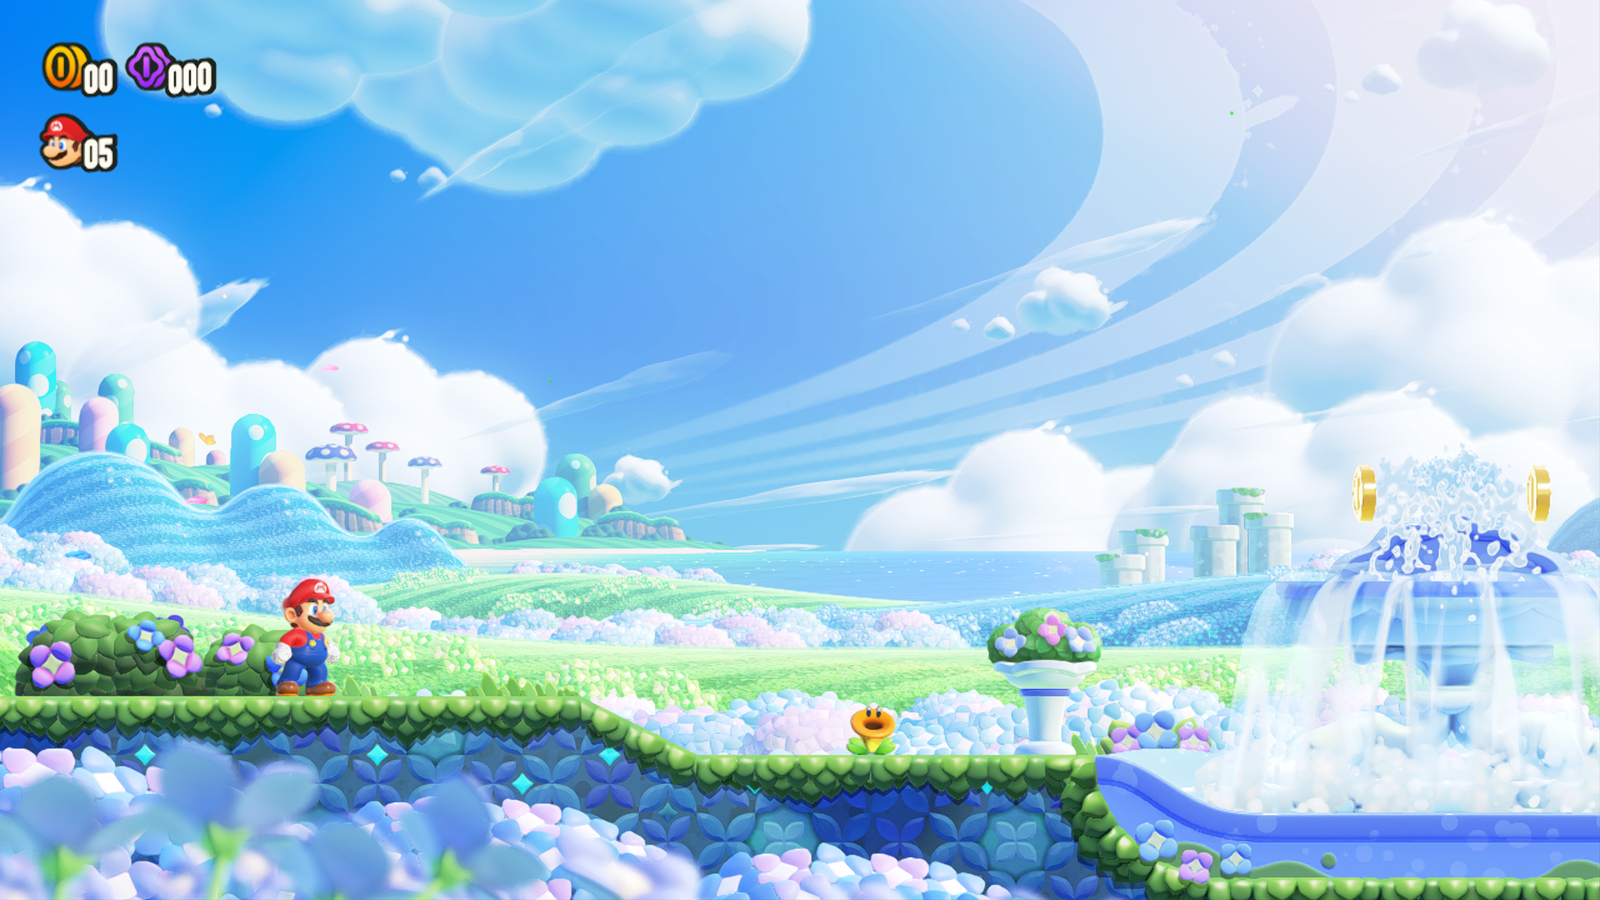 【SMBW 超马惊】What a Breathtaking！这款游戏的美术风格真的太漂亮了！我真的超级超级喜欢第一关的紫阳花海，真的太美了！——